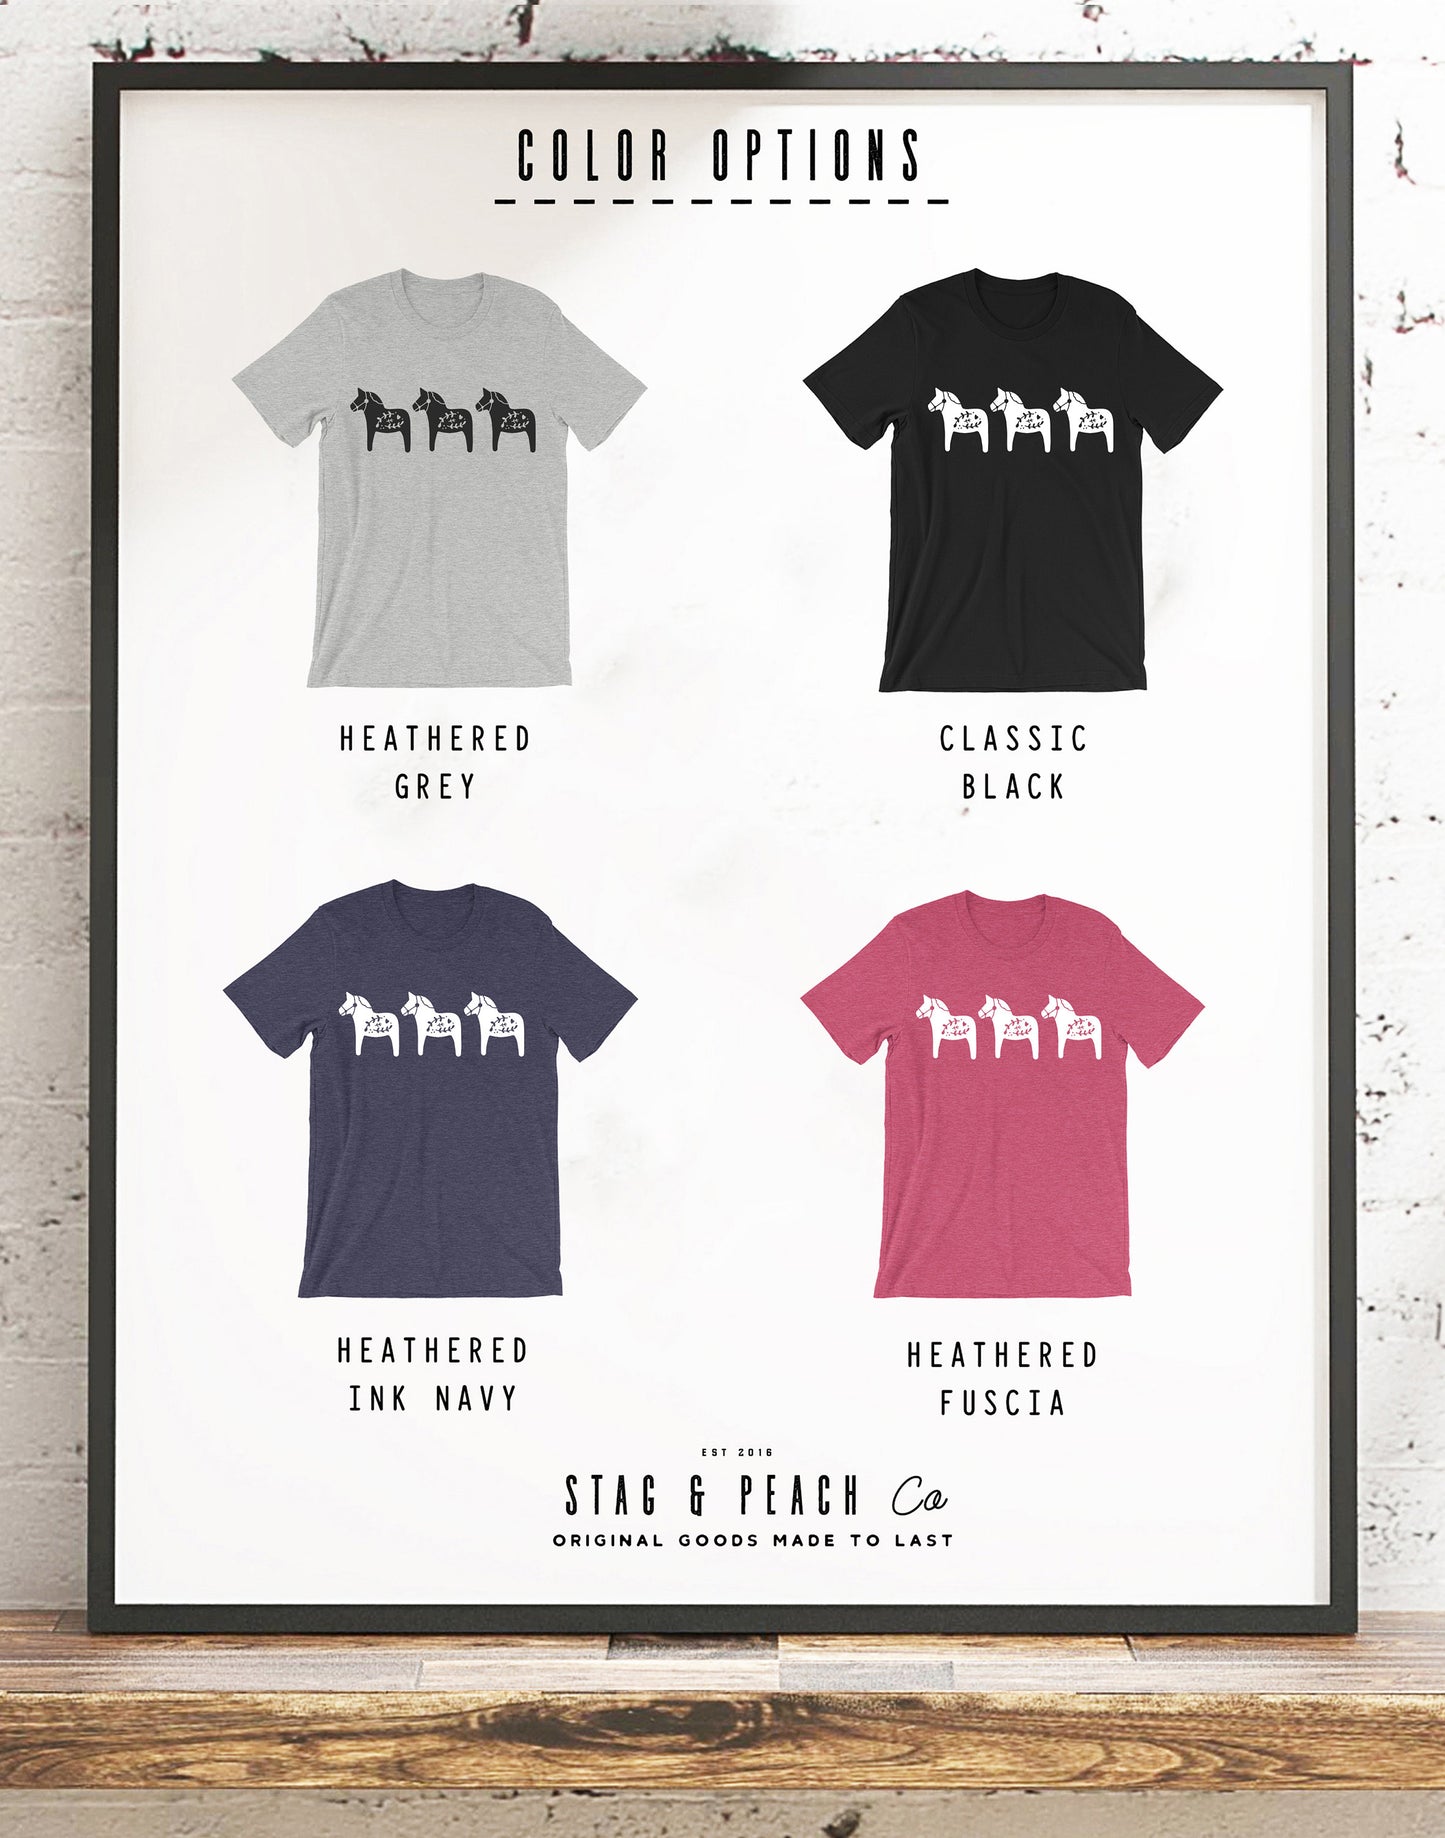 Cute Dala Horse Unisex Shirt - Horse Shirt, Scandinavian Shirt, Swedish Horse TShirt, Horse Print Shirt, Folk Art Tee, Holiday Horse Shirt